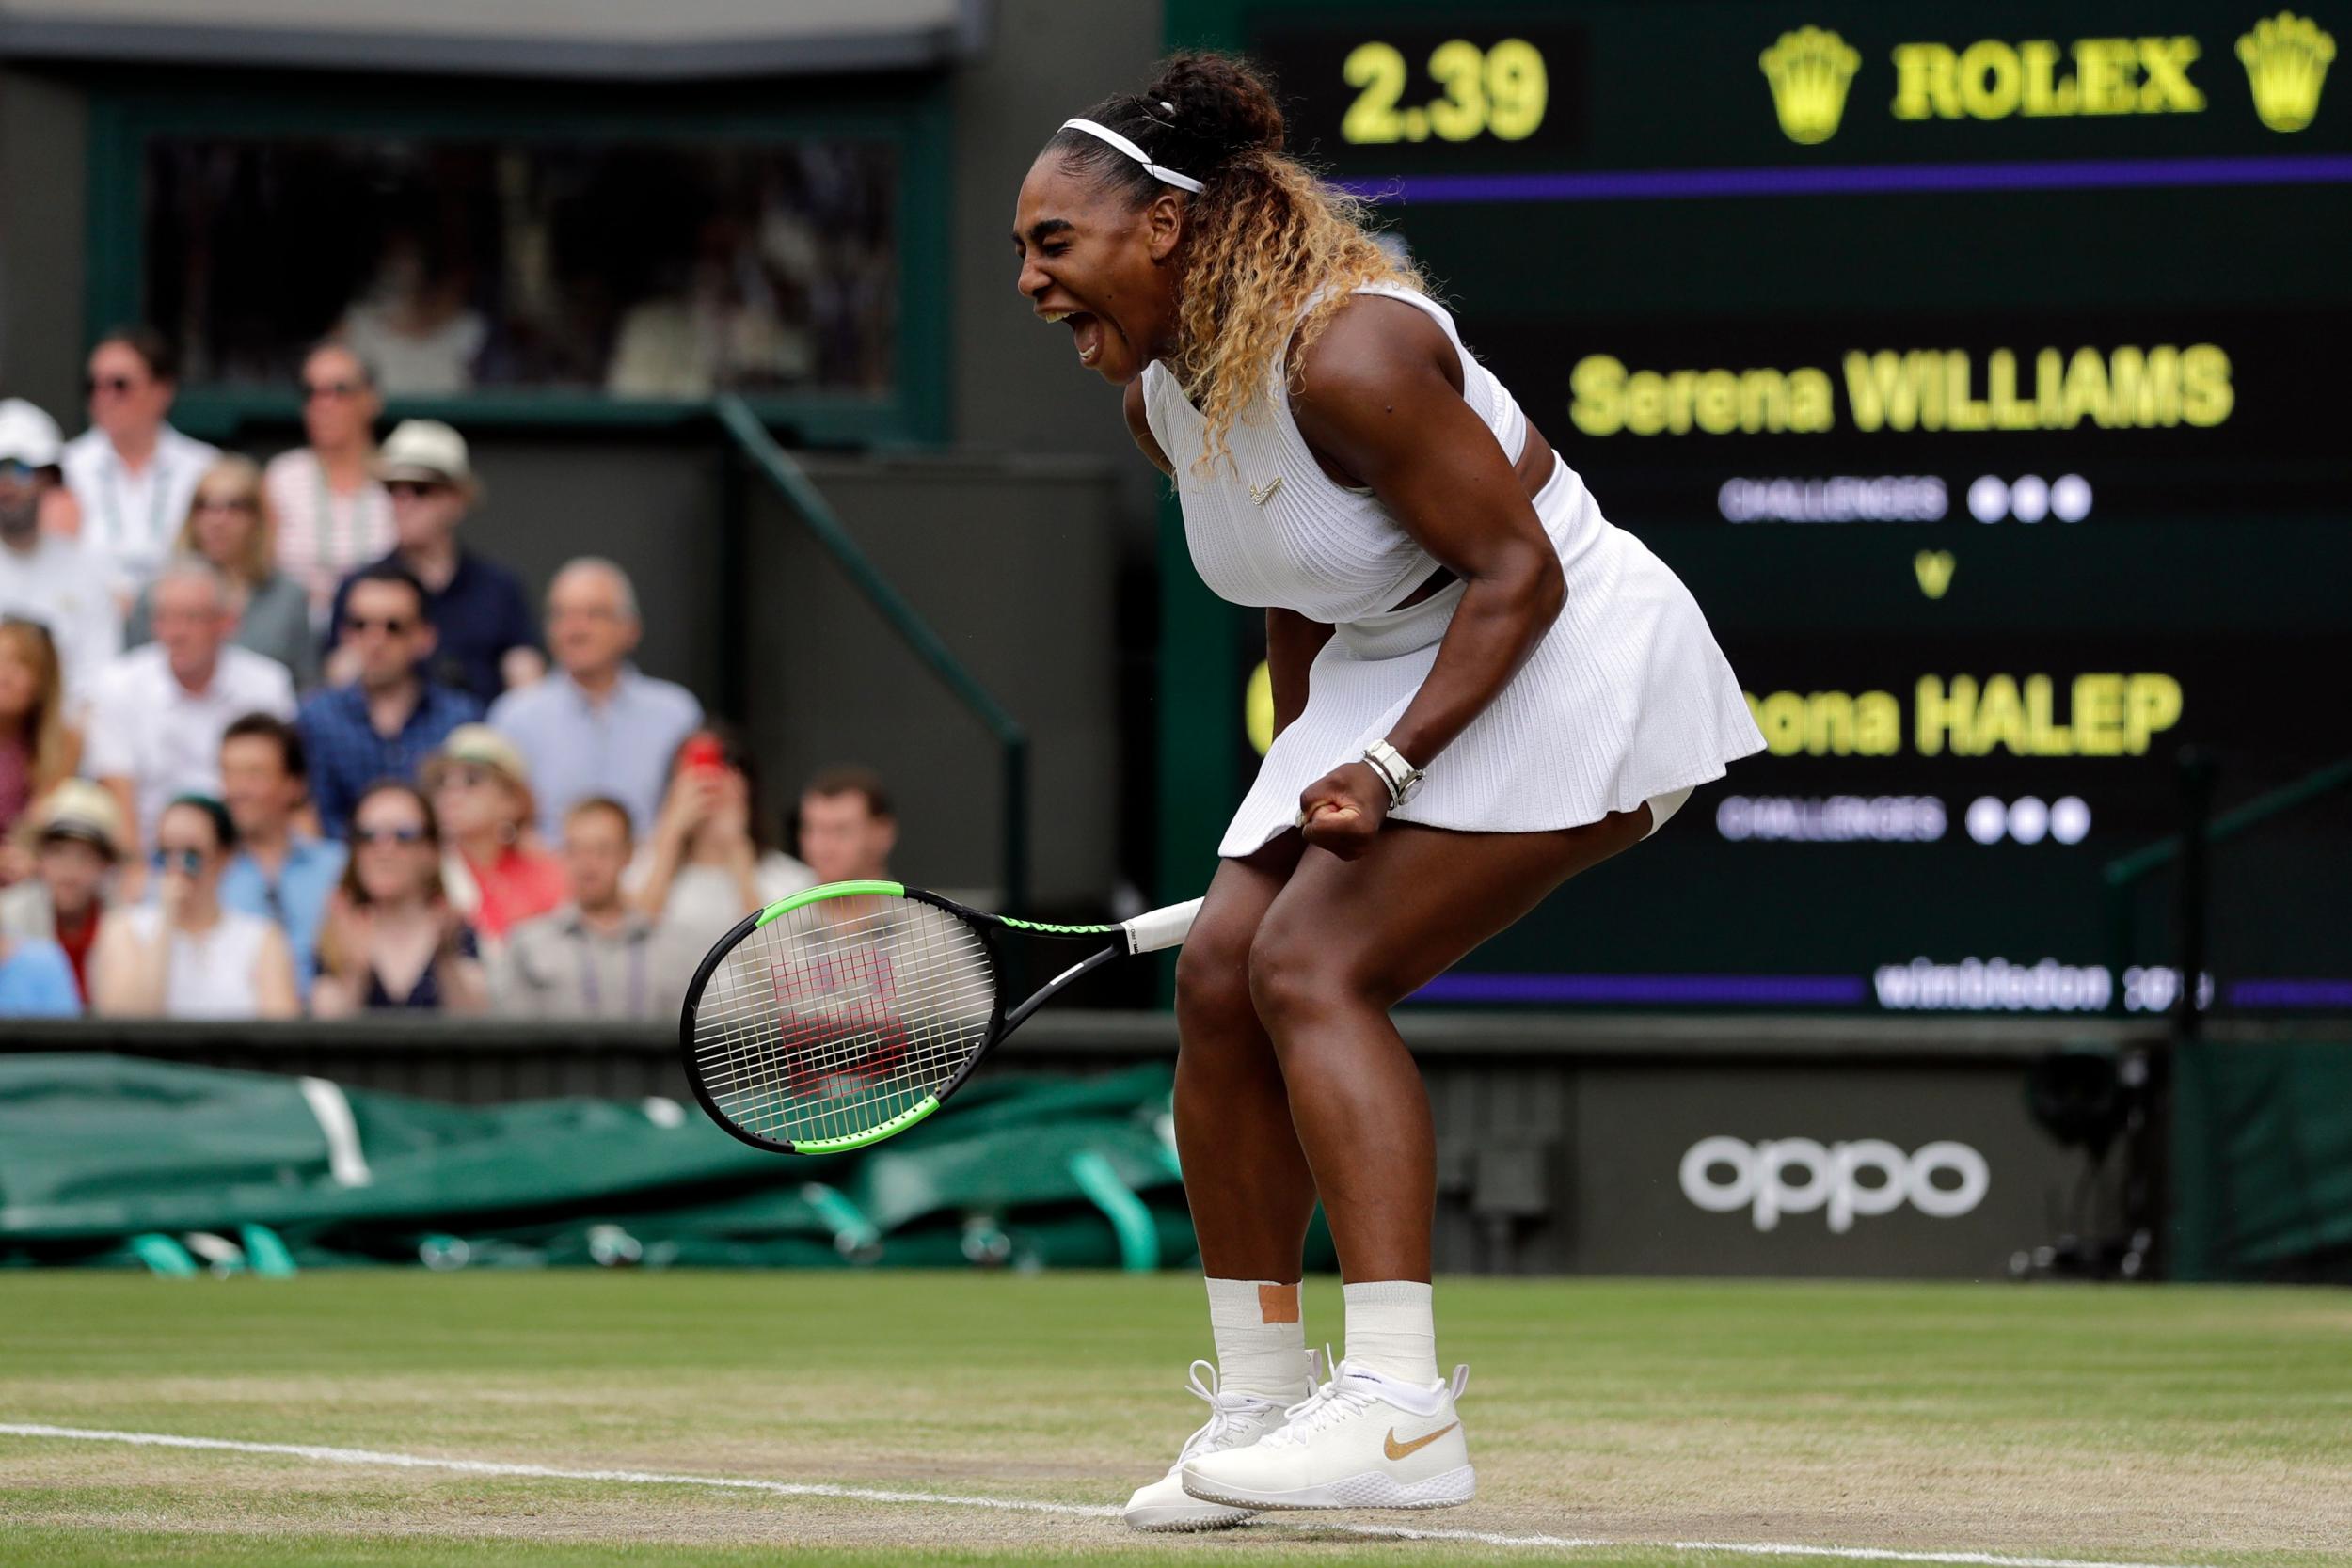 Winner: Simona Halep Runner-up: Serena Williams. 